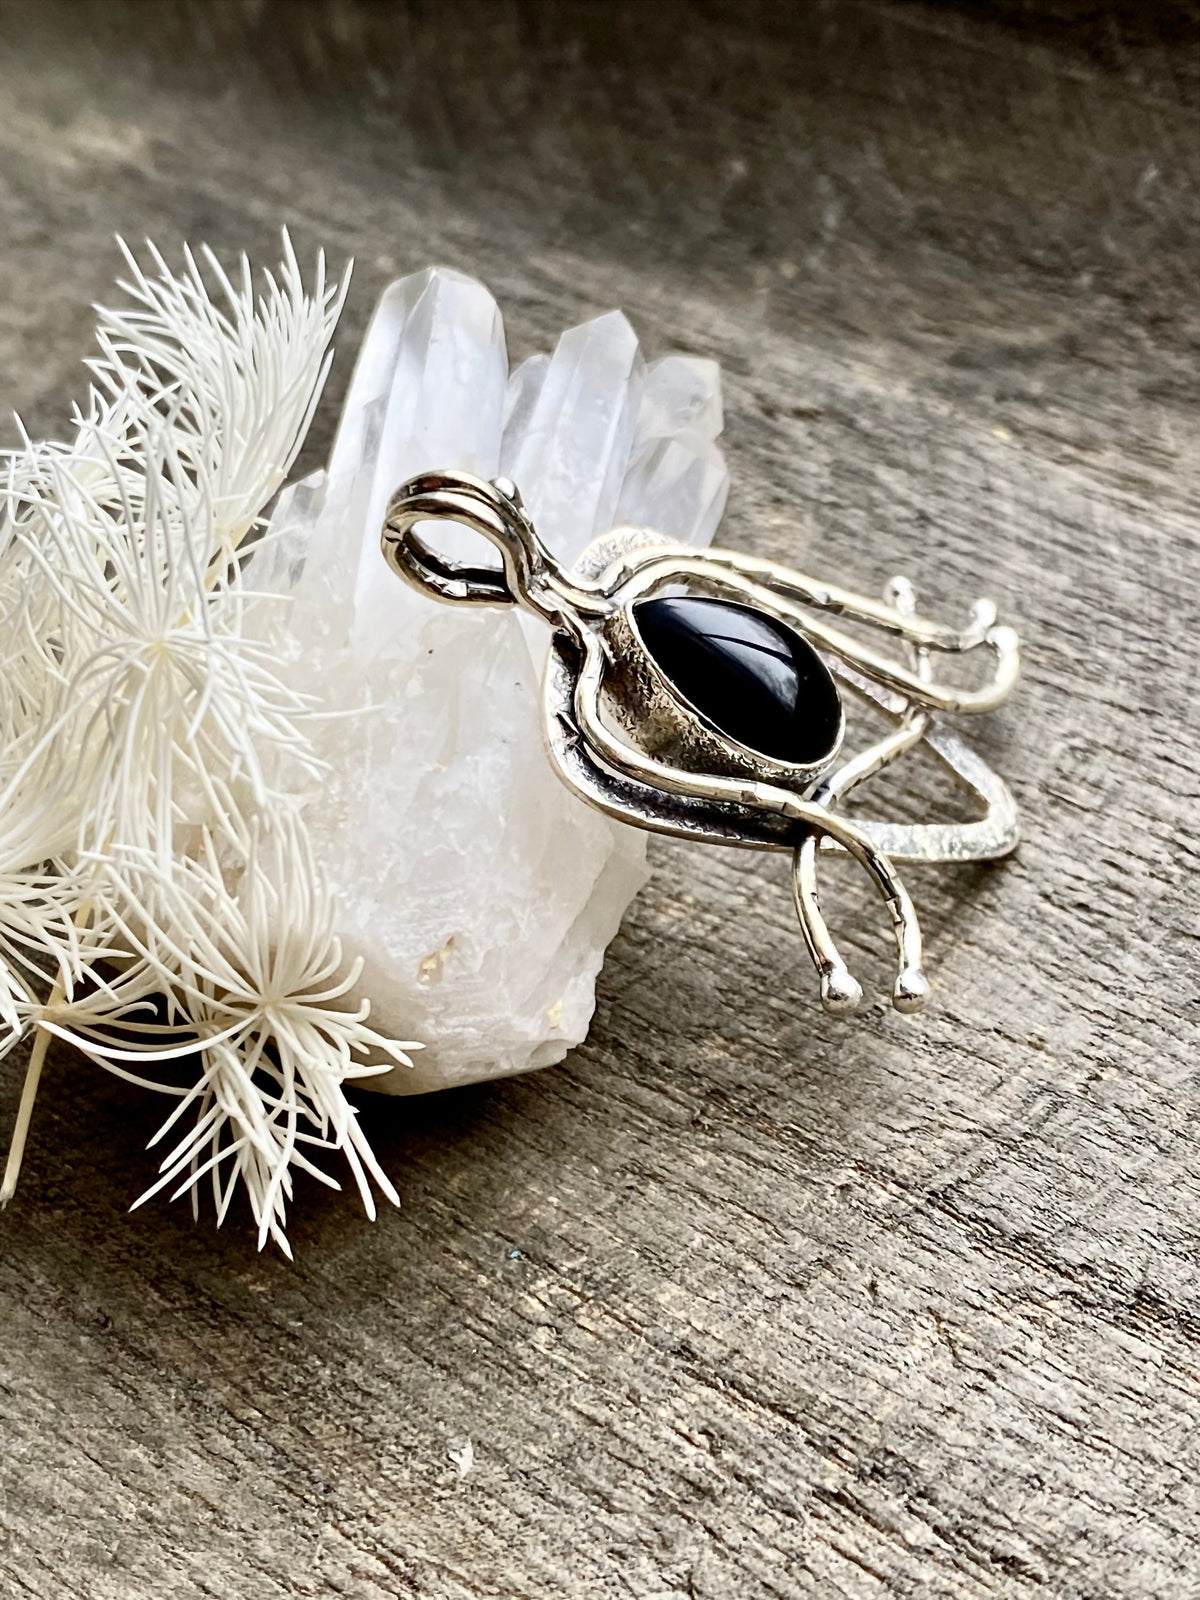 Black Onyx 925 Silver Handmade Pendant - Crystal Healing Meditation